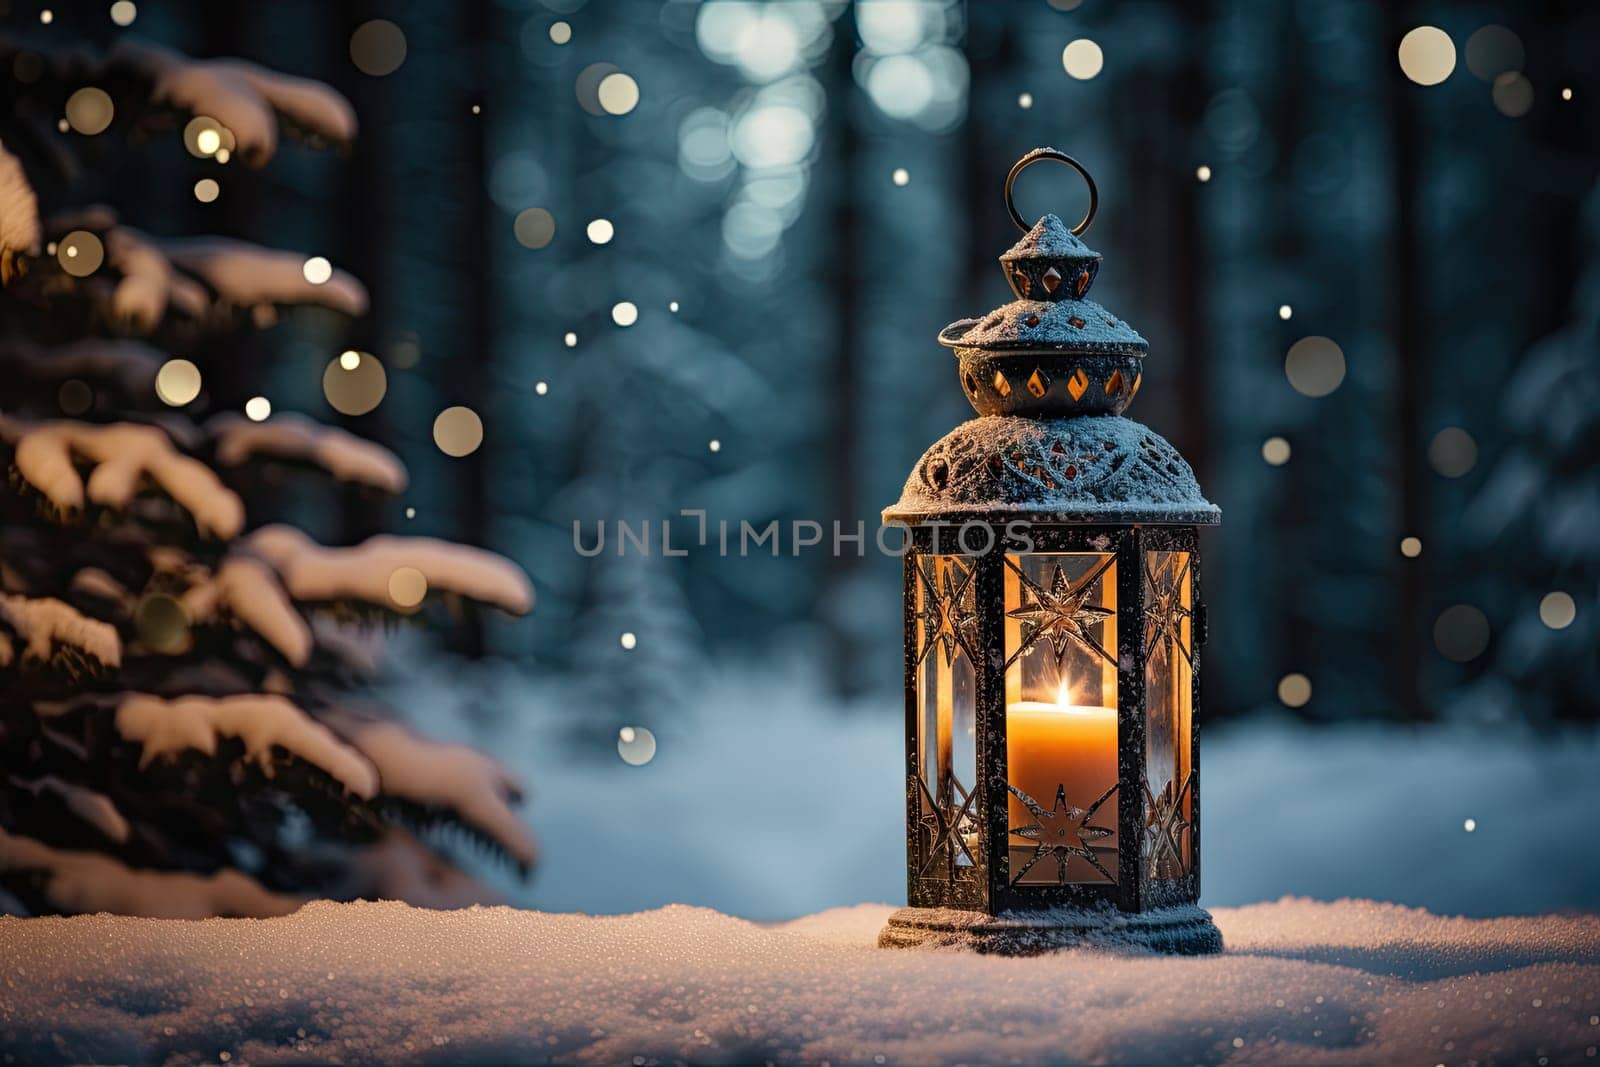 A Serene Winter Evening: Illuminated Lantern Casting Warm Glow on Snow-Covered Pine Tree